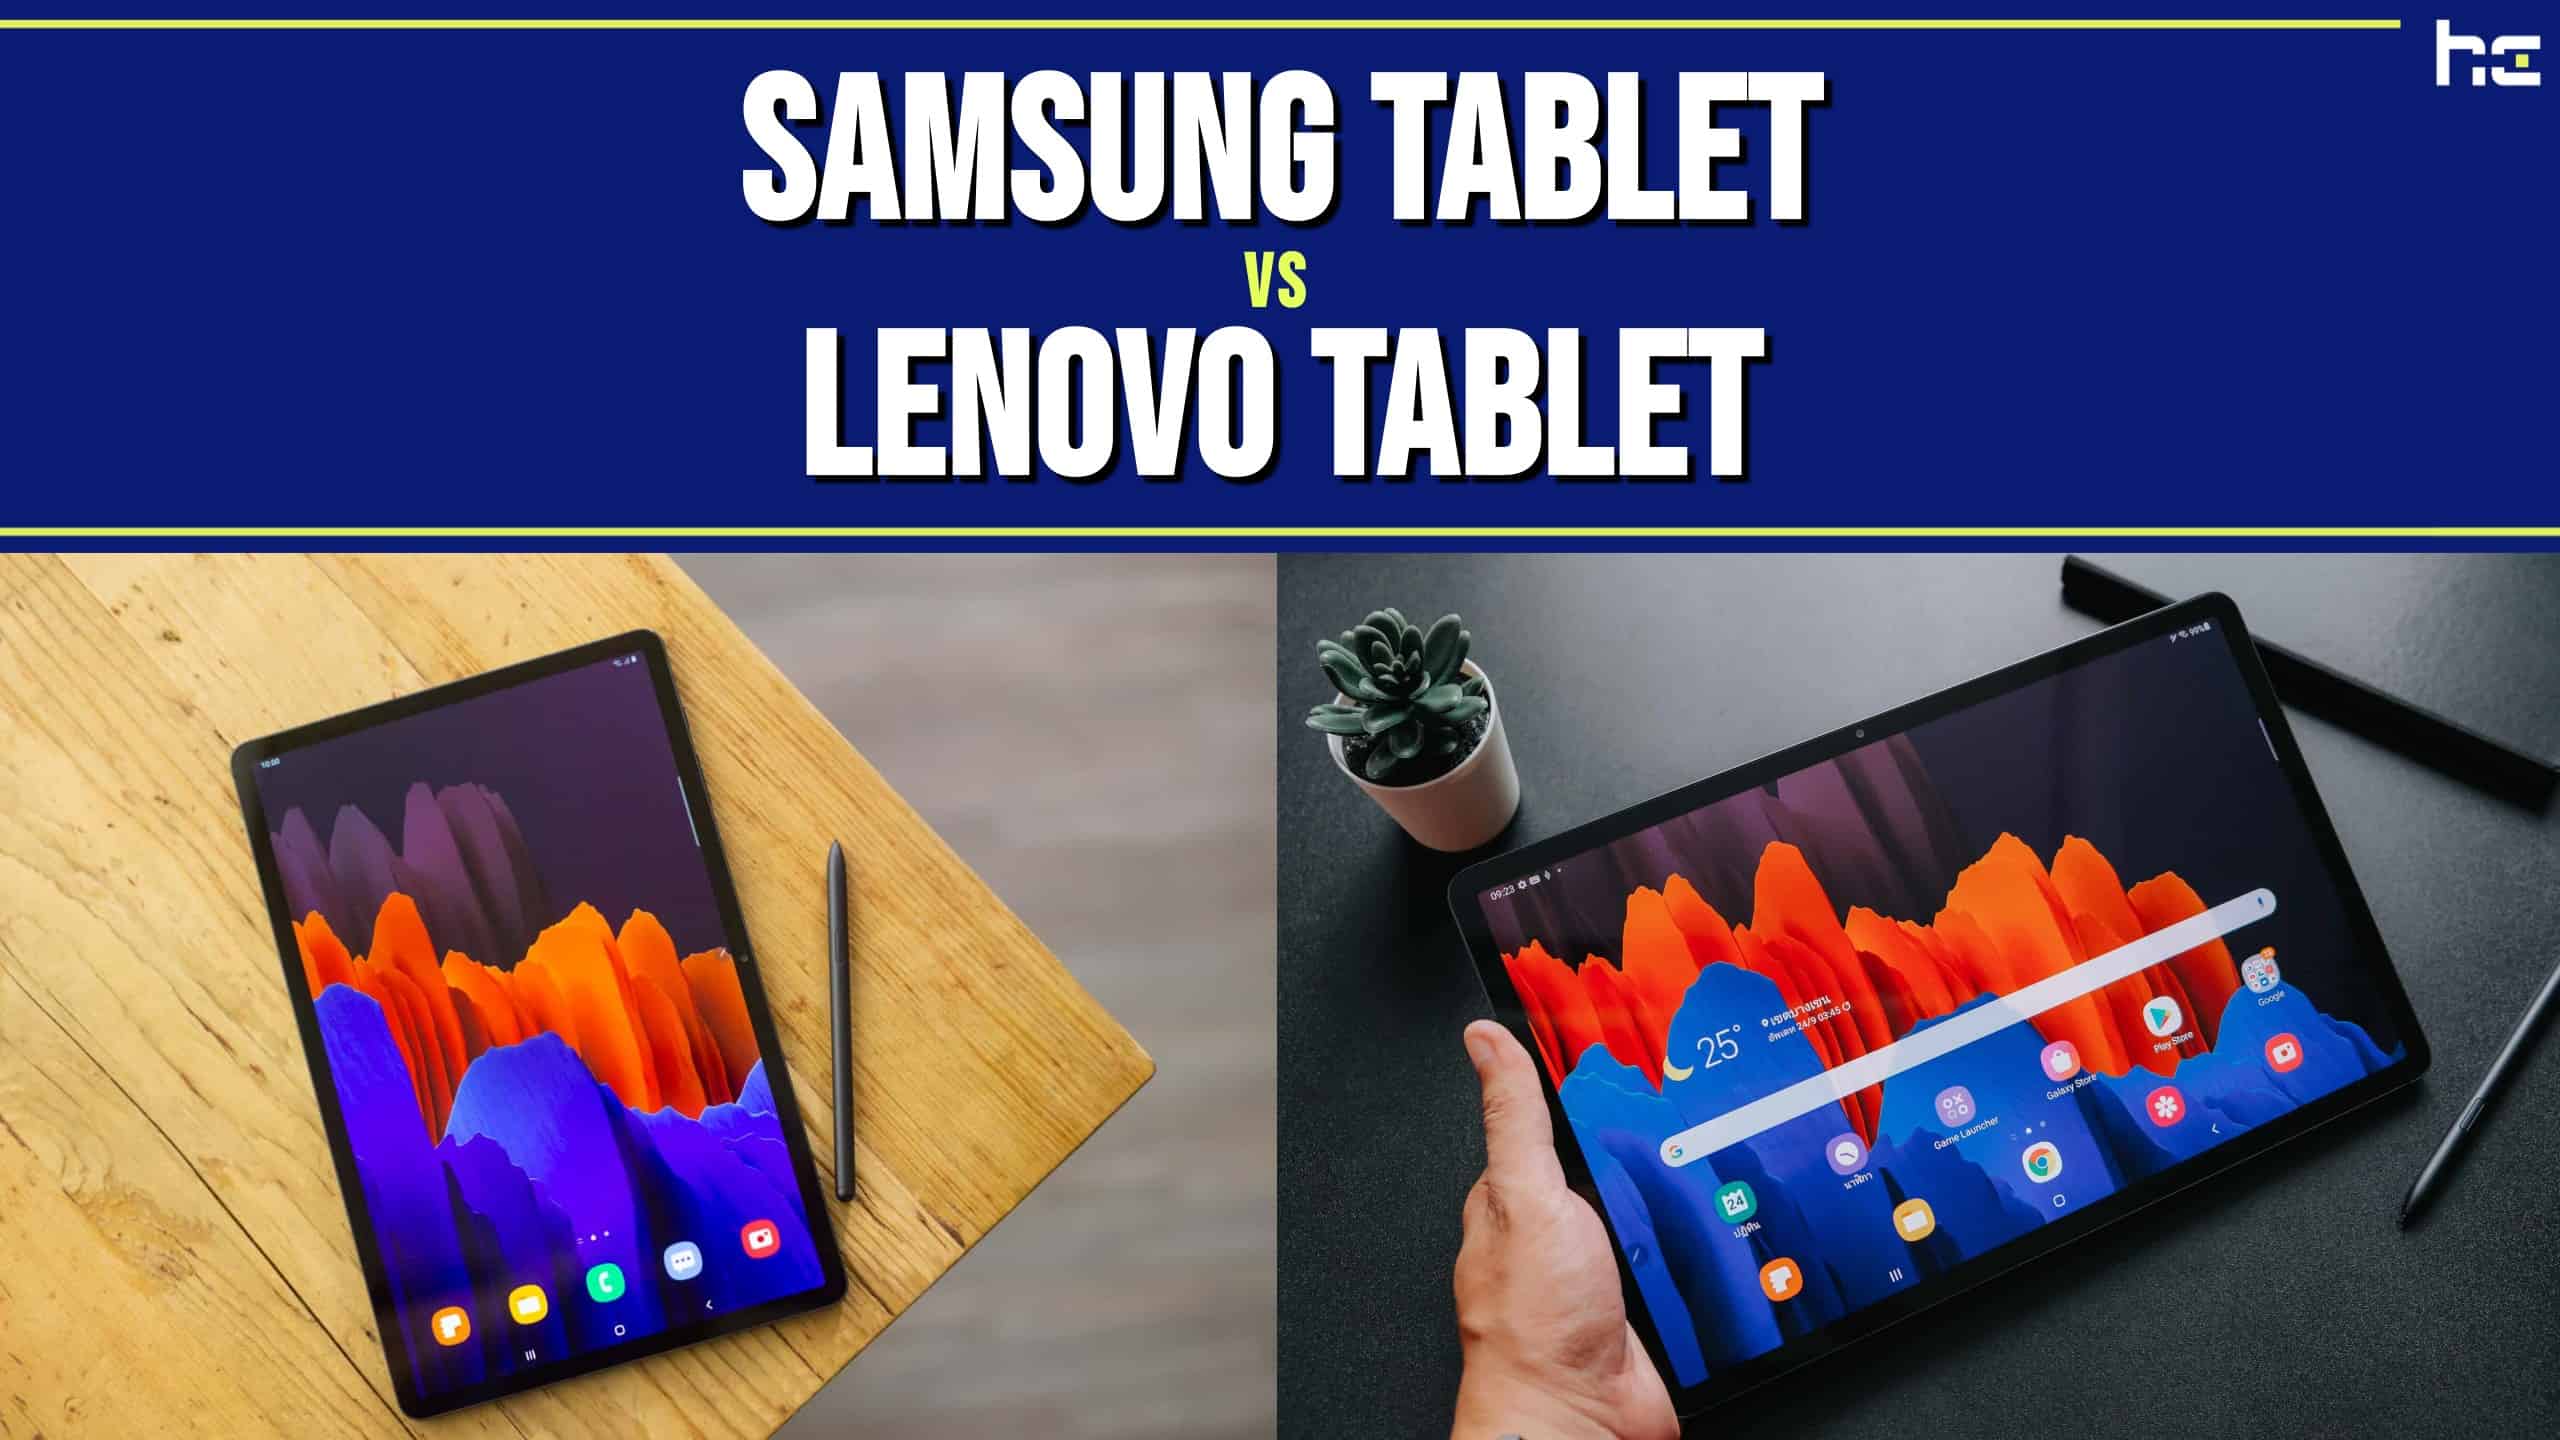 Samsung Tablet vs Lenovo Tablet featured image